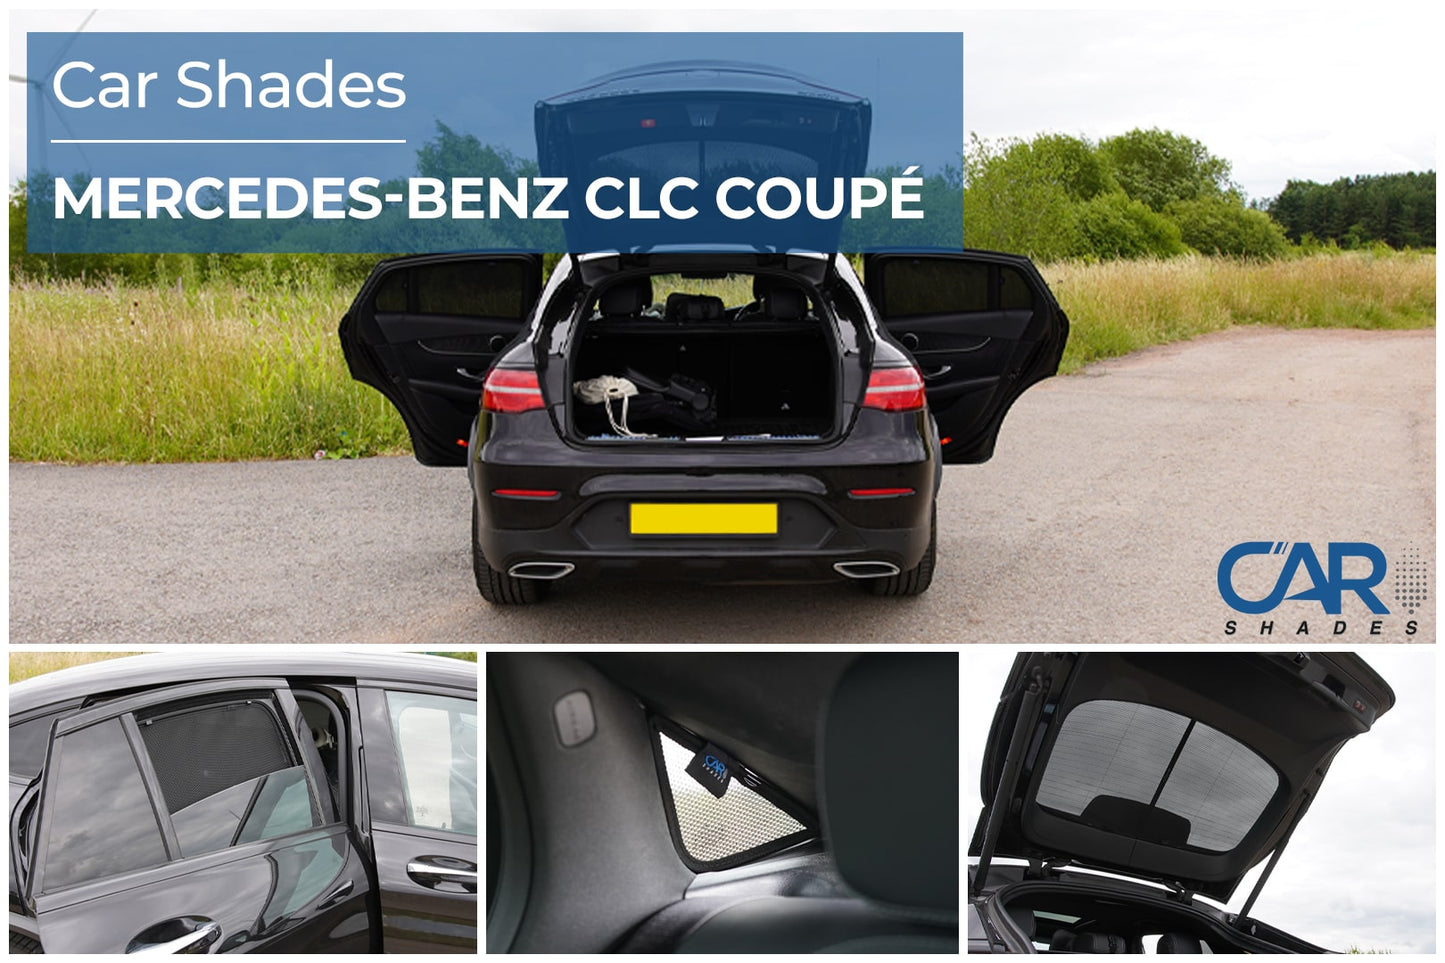 parasoles Mercedes-Benz GLC Cupe 5 puertas 2016-22